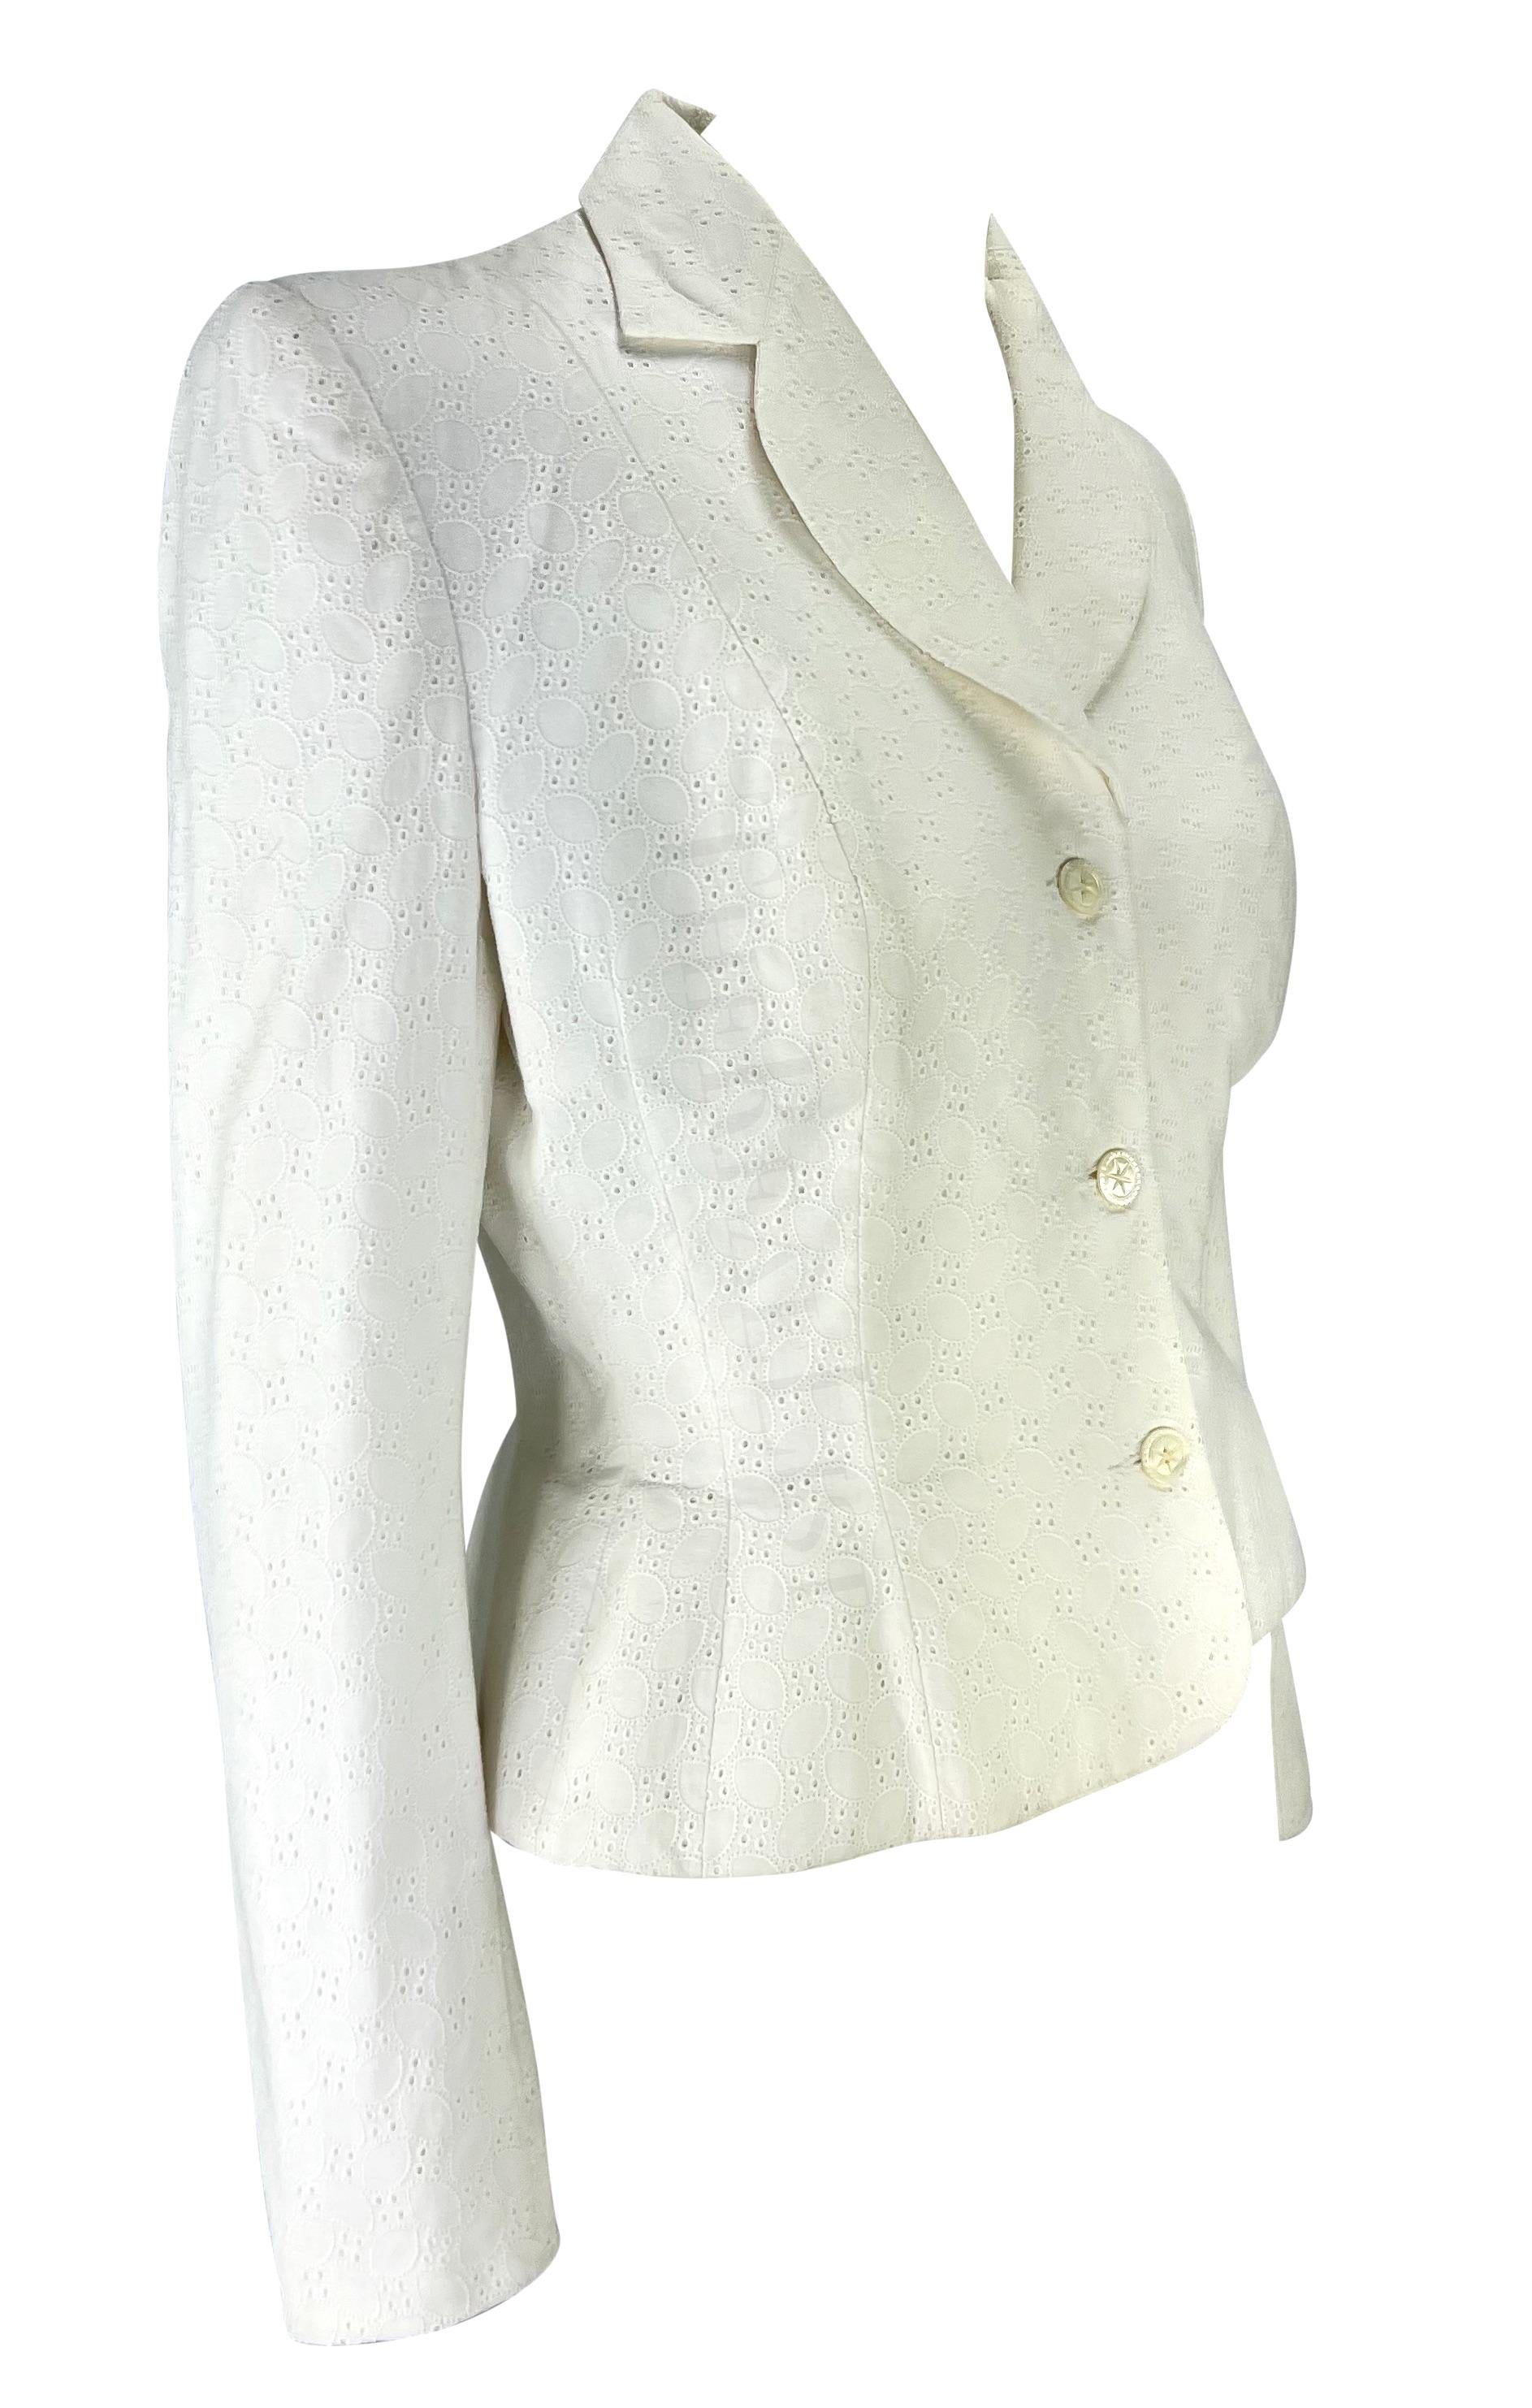 S/S 1996 John Galliano Paris Broderie Anglaise Ballet Peplum White Jacket Blazer For Sale 4